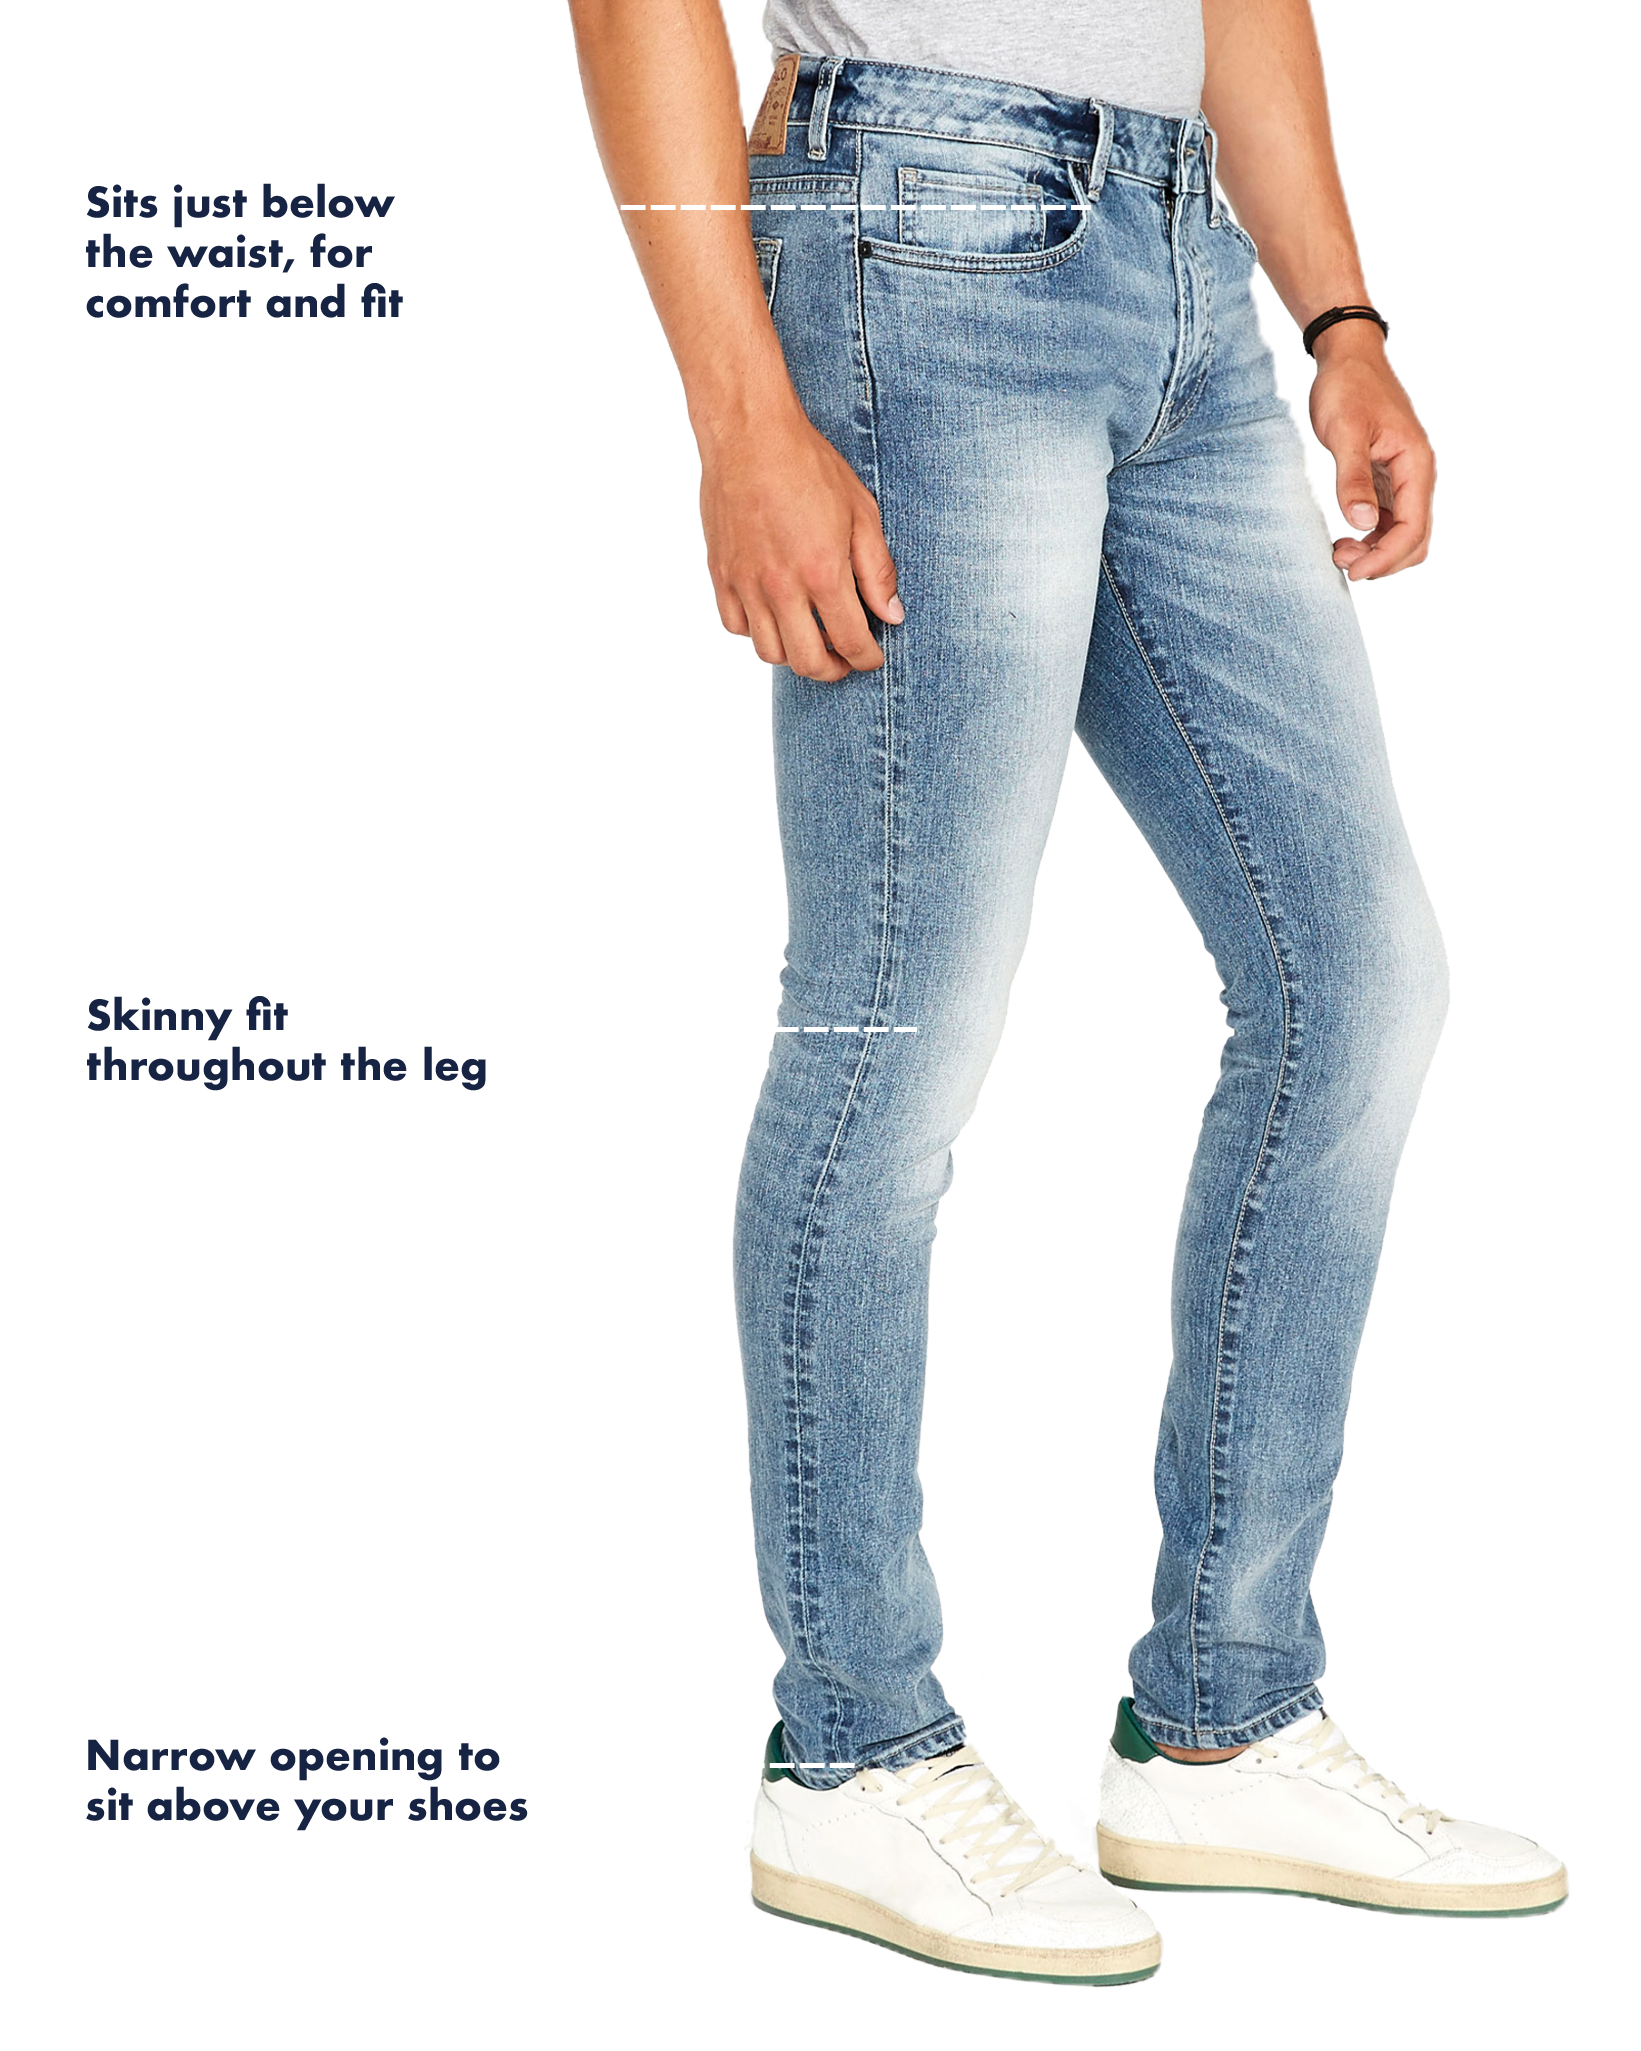 fitguide Buffalo Jeans - US